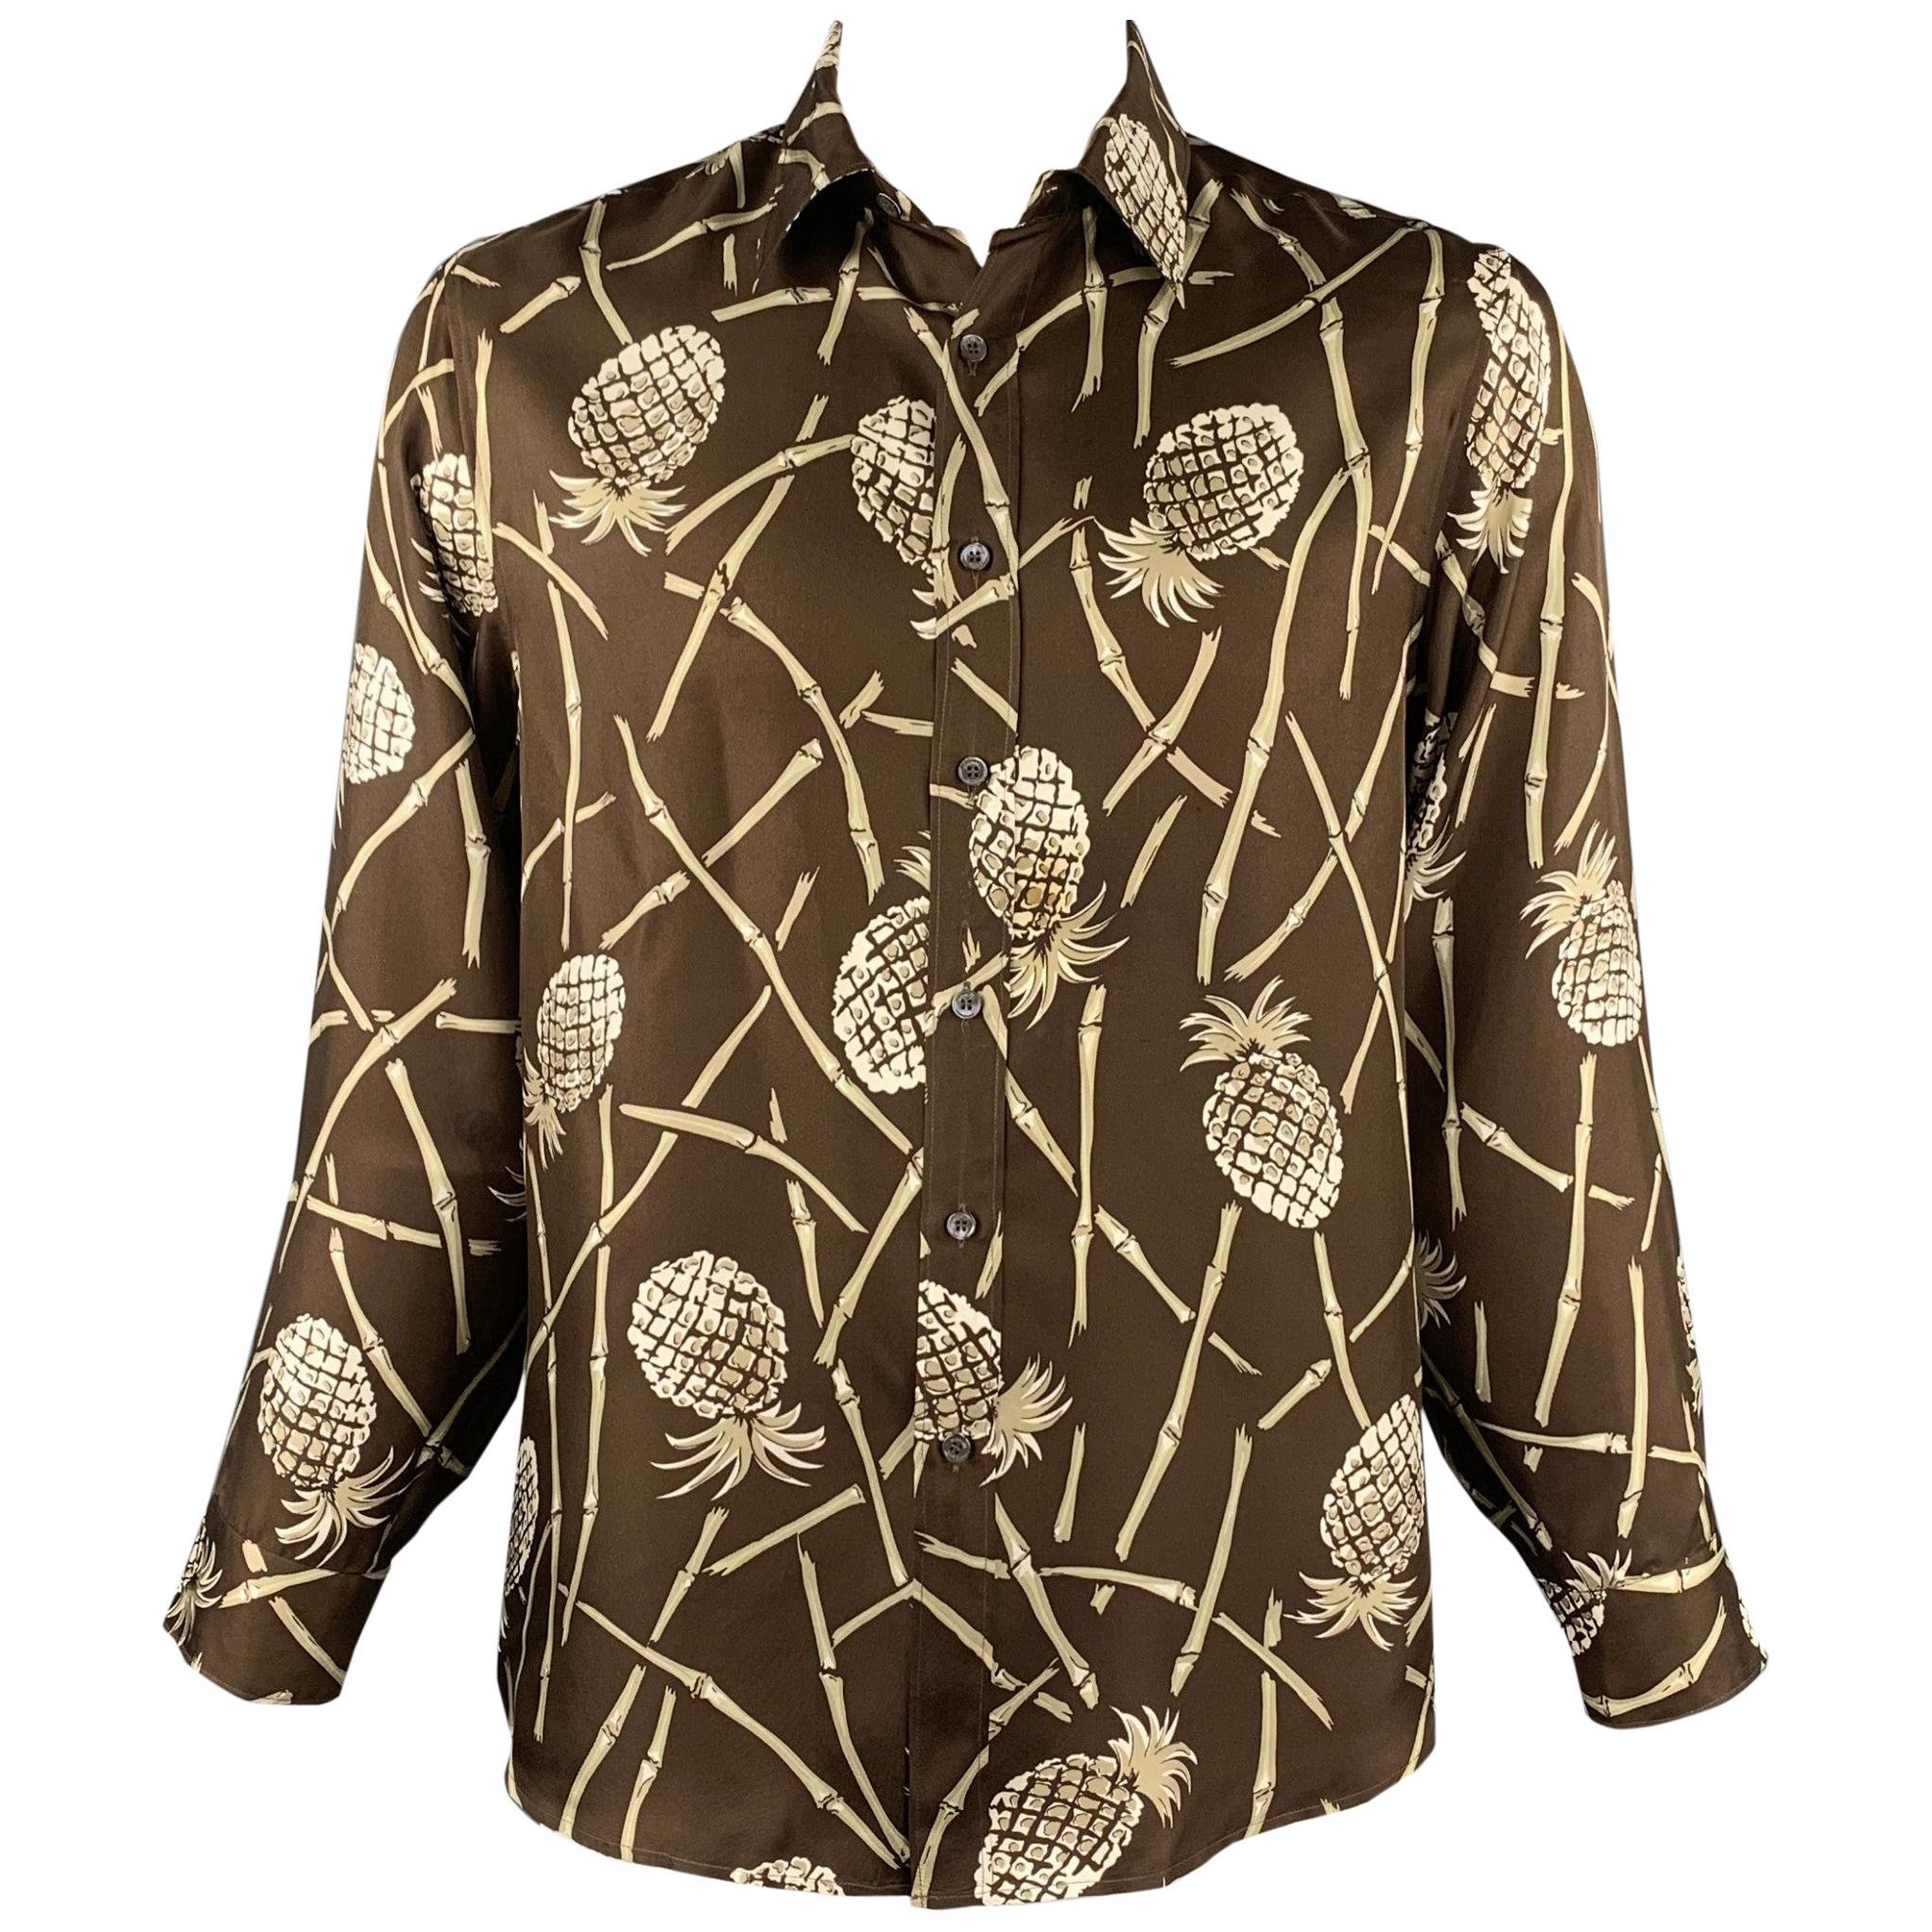 MICHAEL KORS Size L Brown & White Print Silk Button Up Long Sleeve Shirt